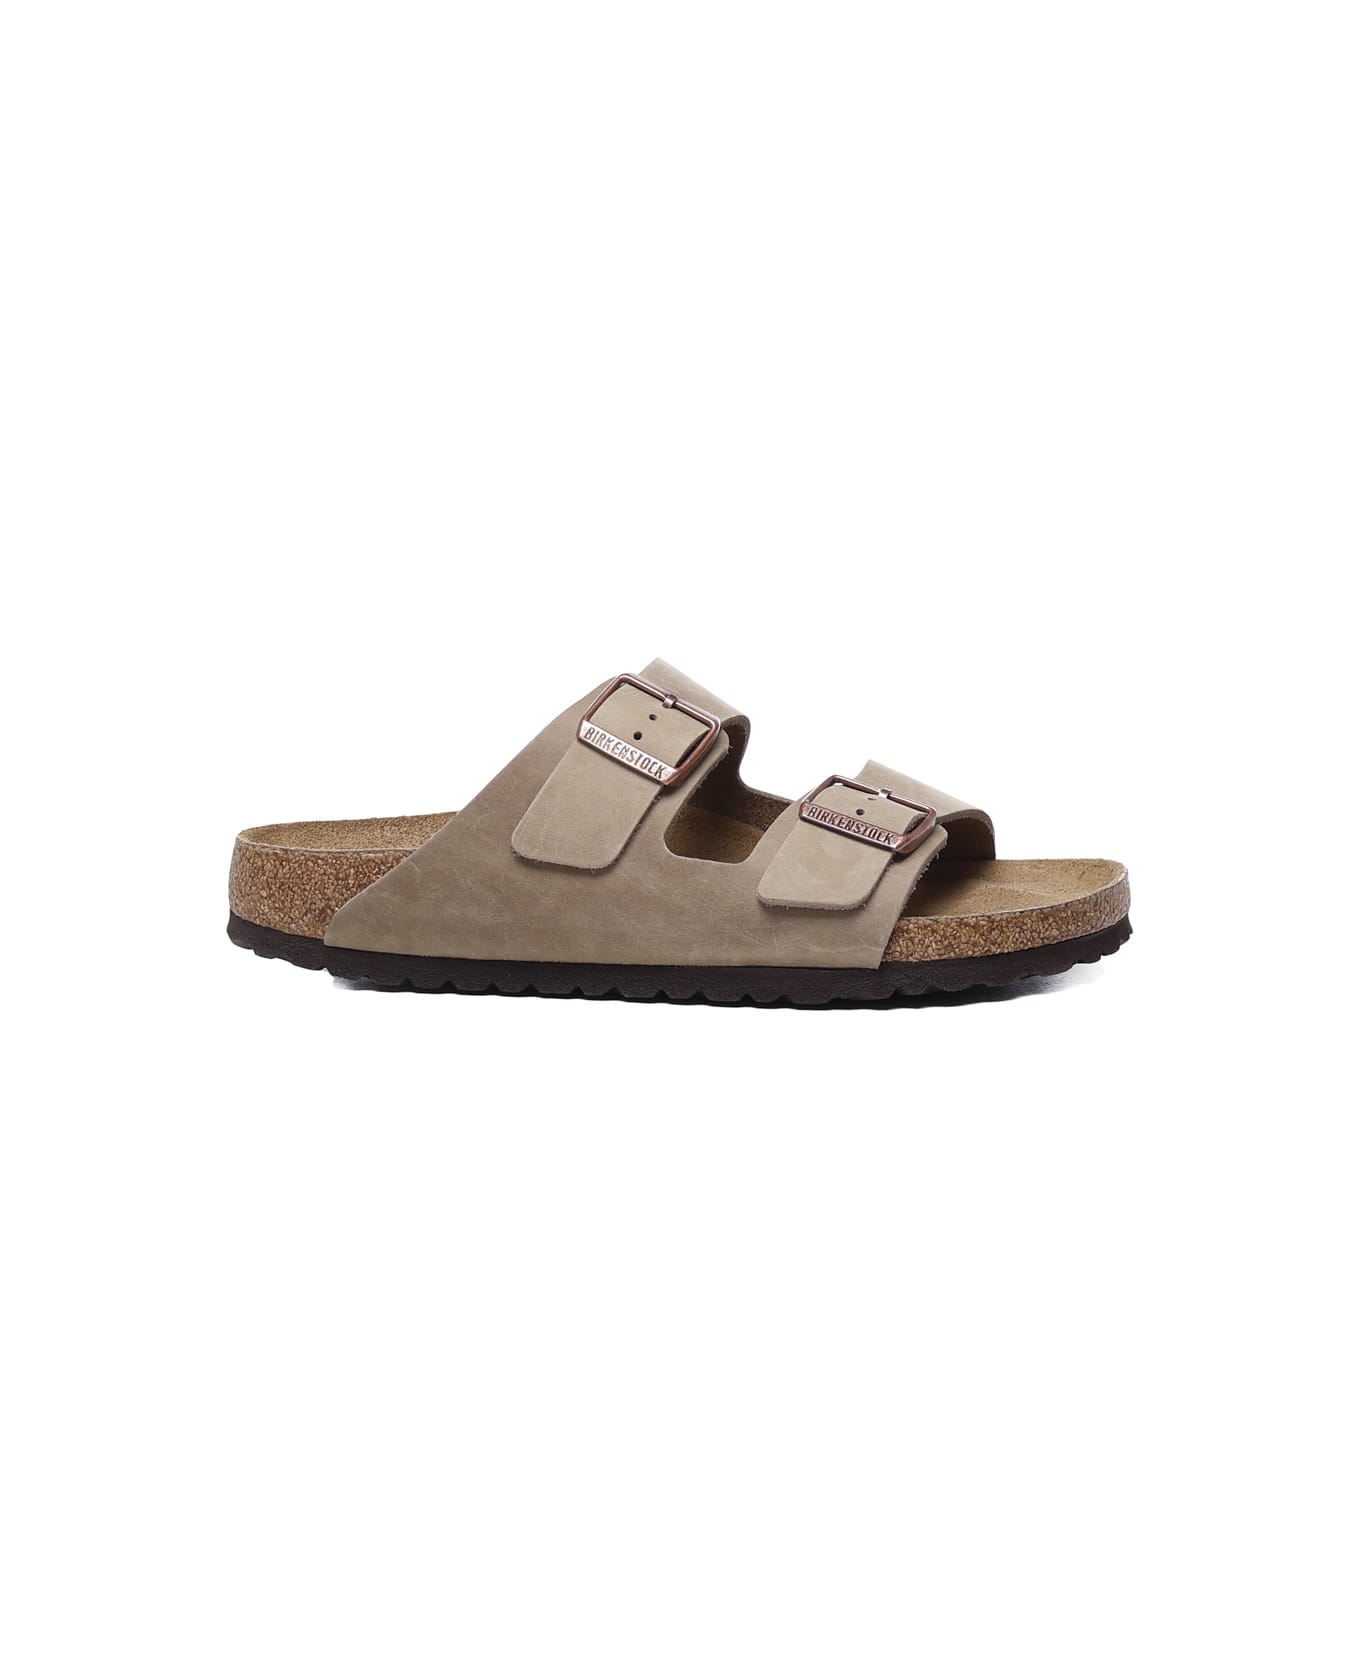 Birkenstock Arizona Sandals - Tabacco brown